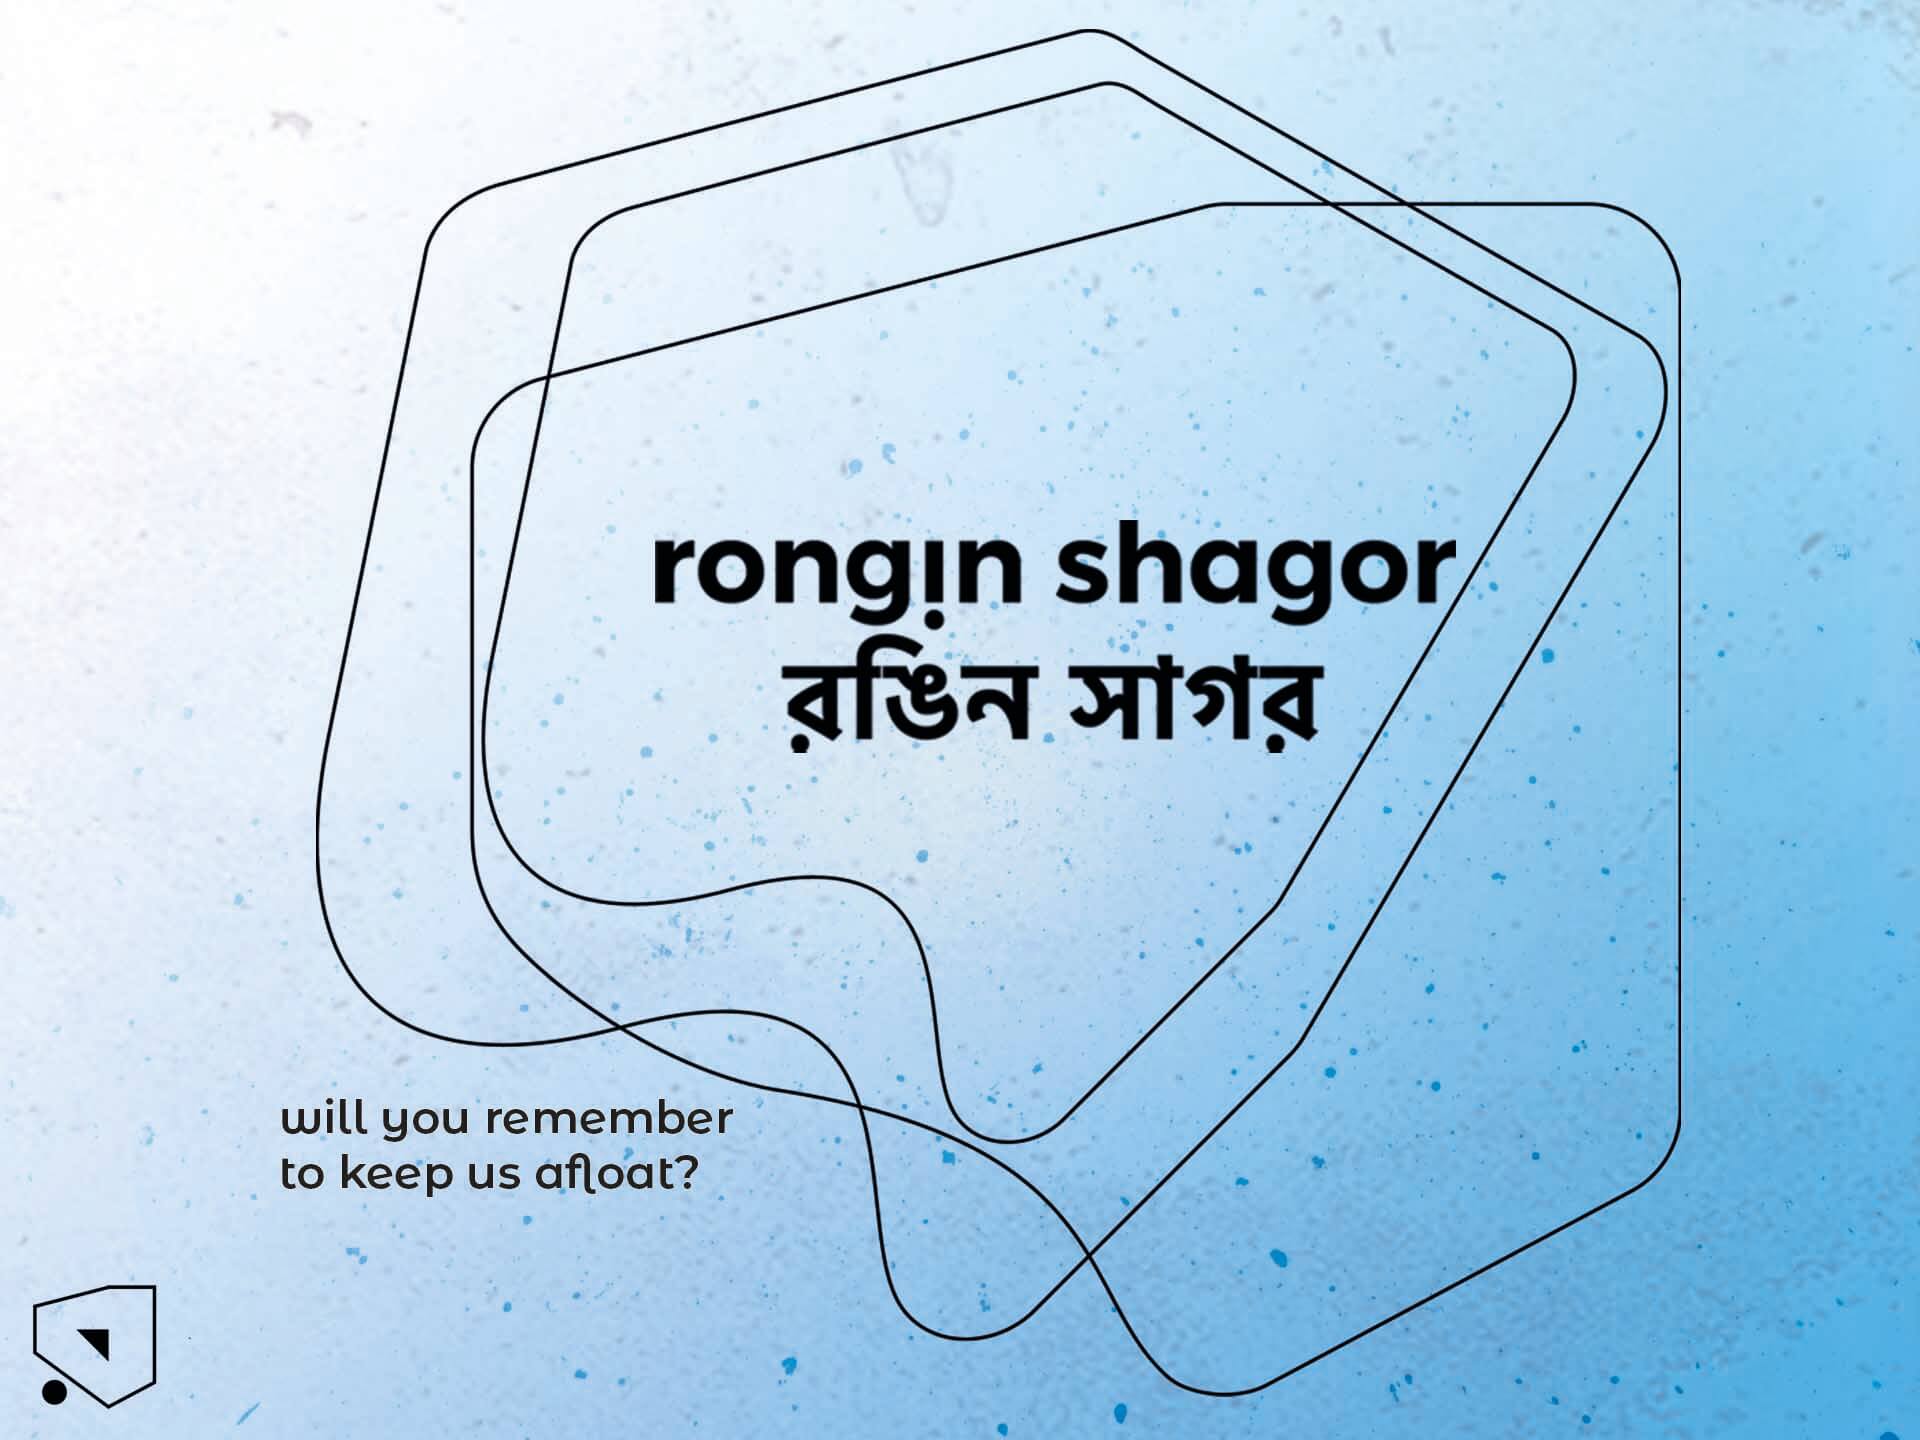 رونجين شاجور / রঙিন সাগর